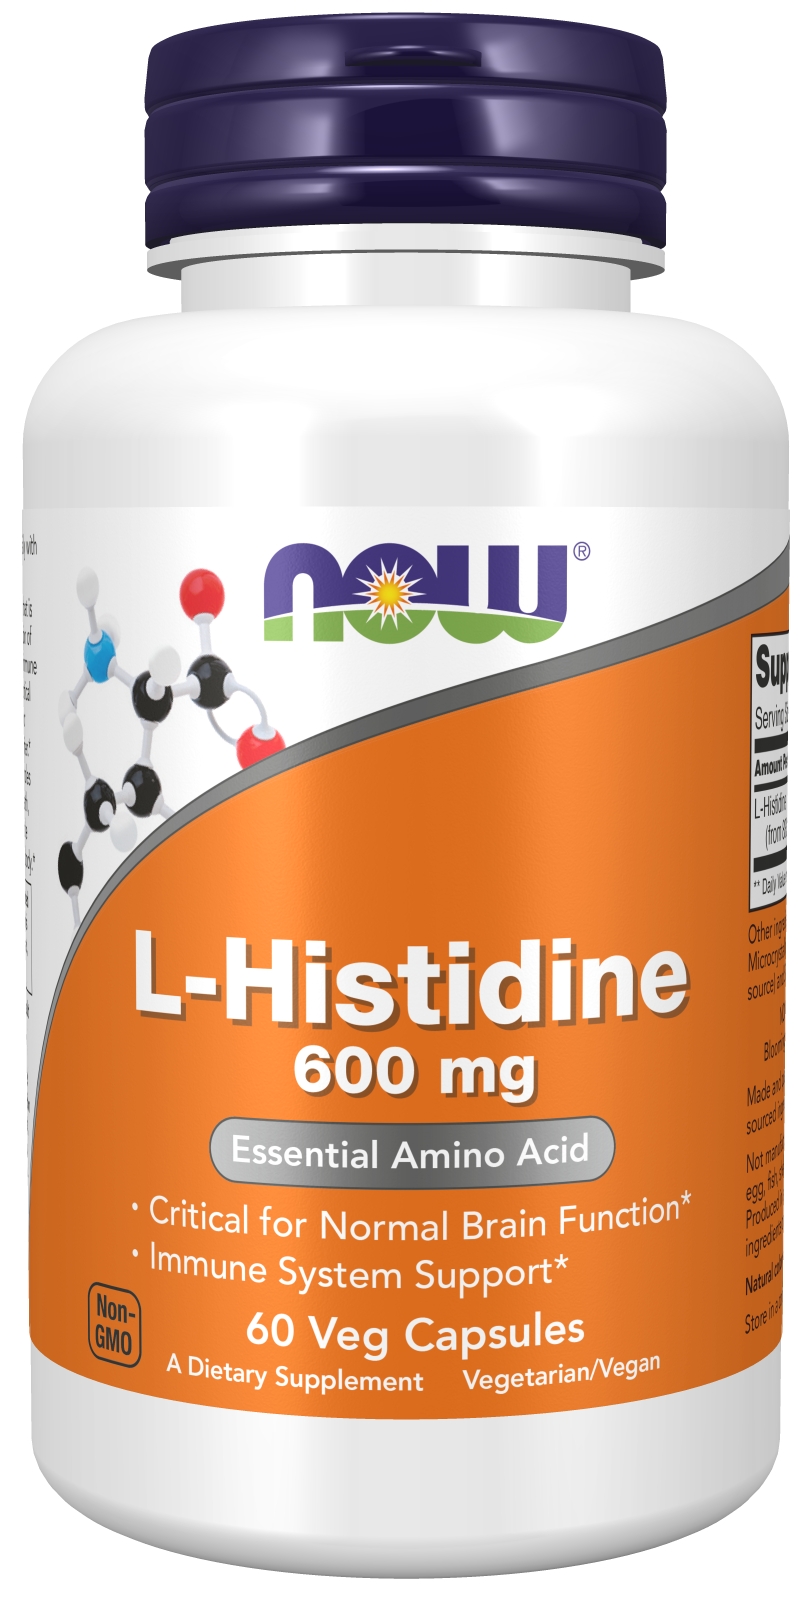 L-Histidine 600 mg - 60 Veg Capsules Bottle Front